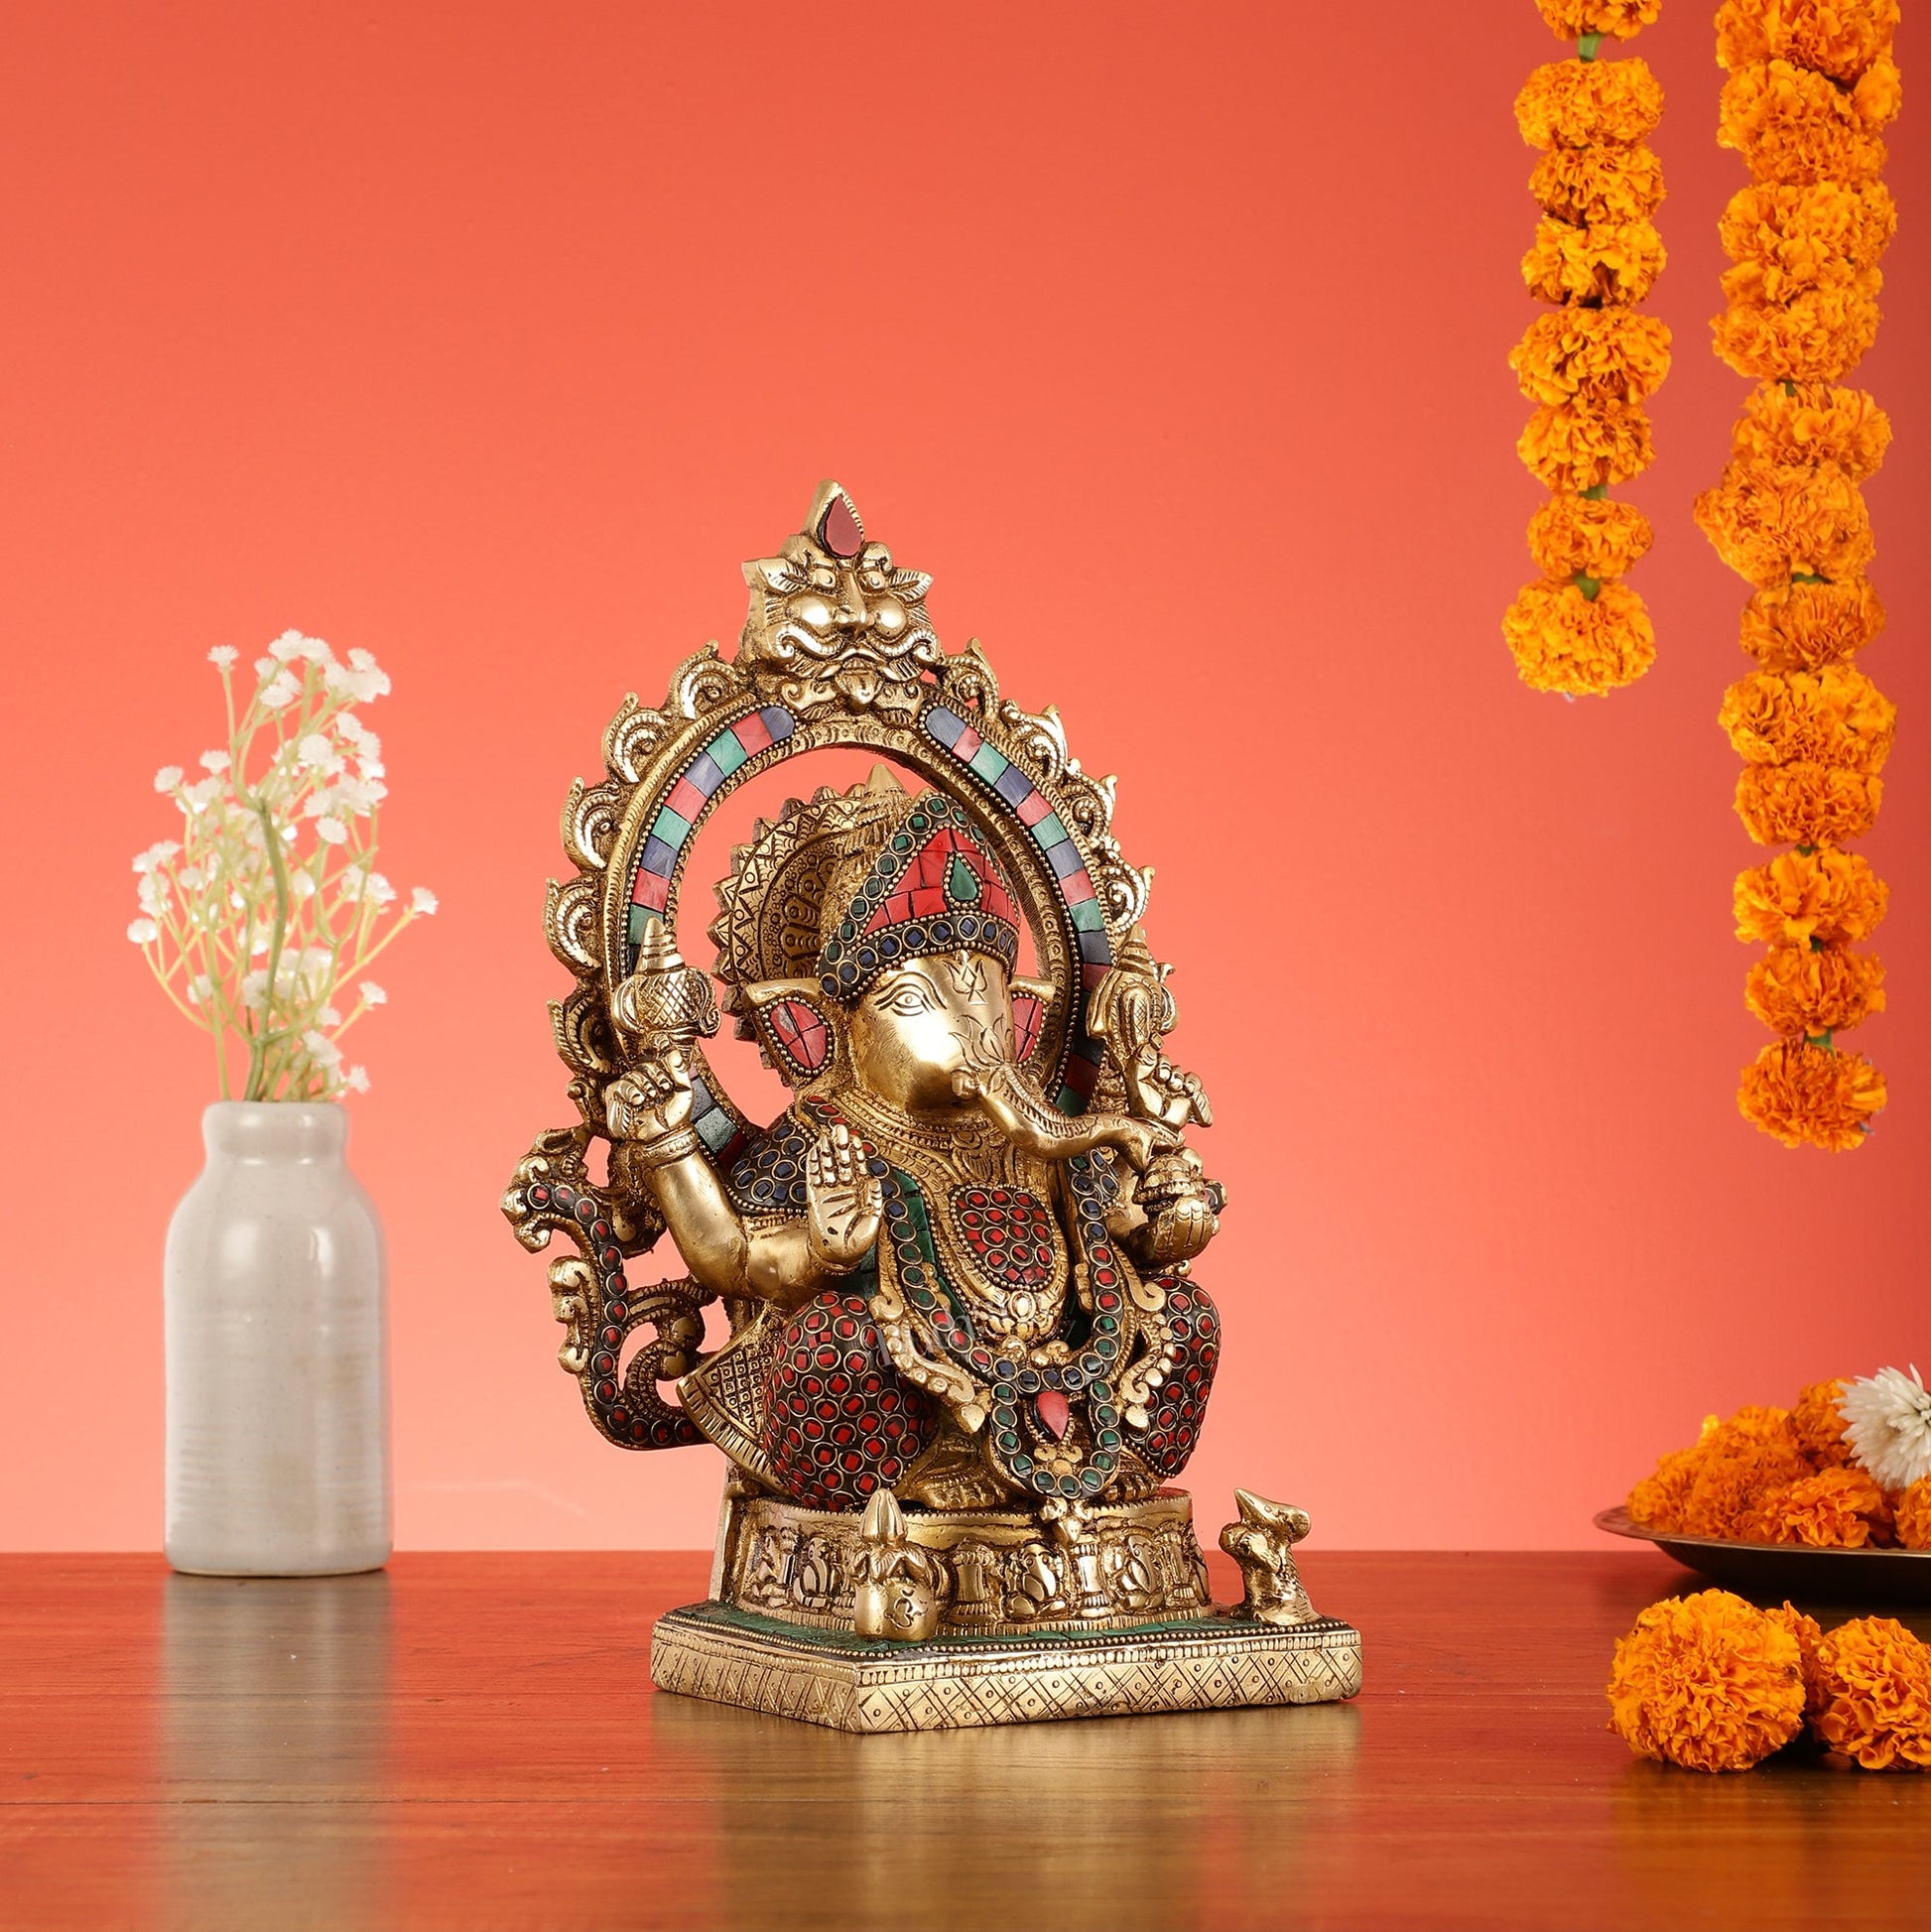 Brass Lord Ganesha Statue with Frame and Ashtavinayaka Carvings - 12 Inch - Budhshiv.com